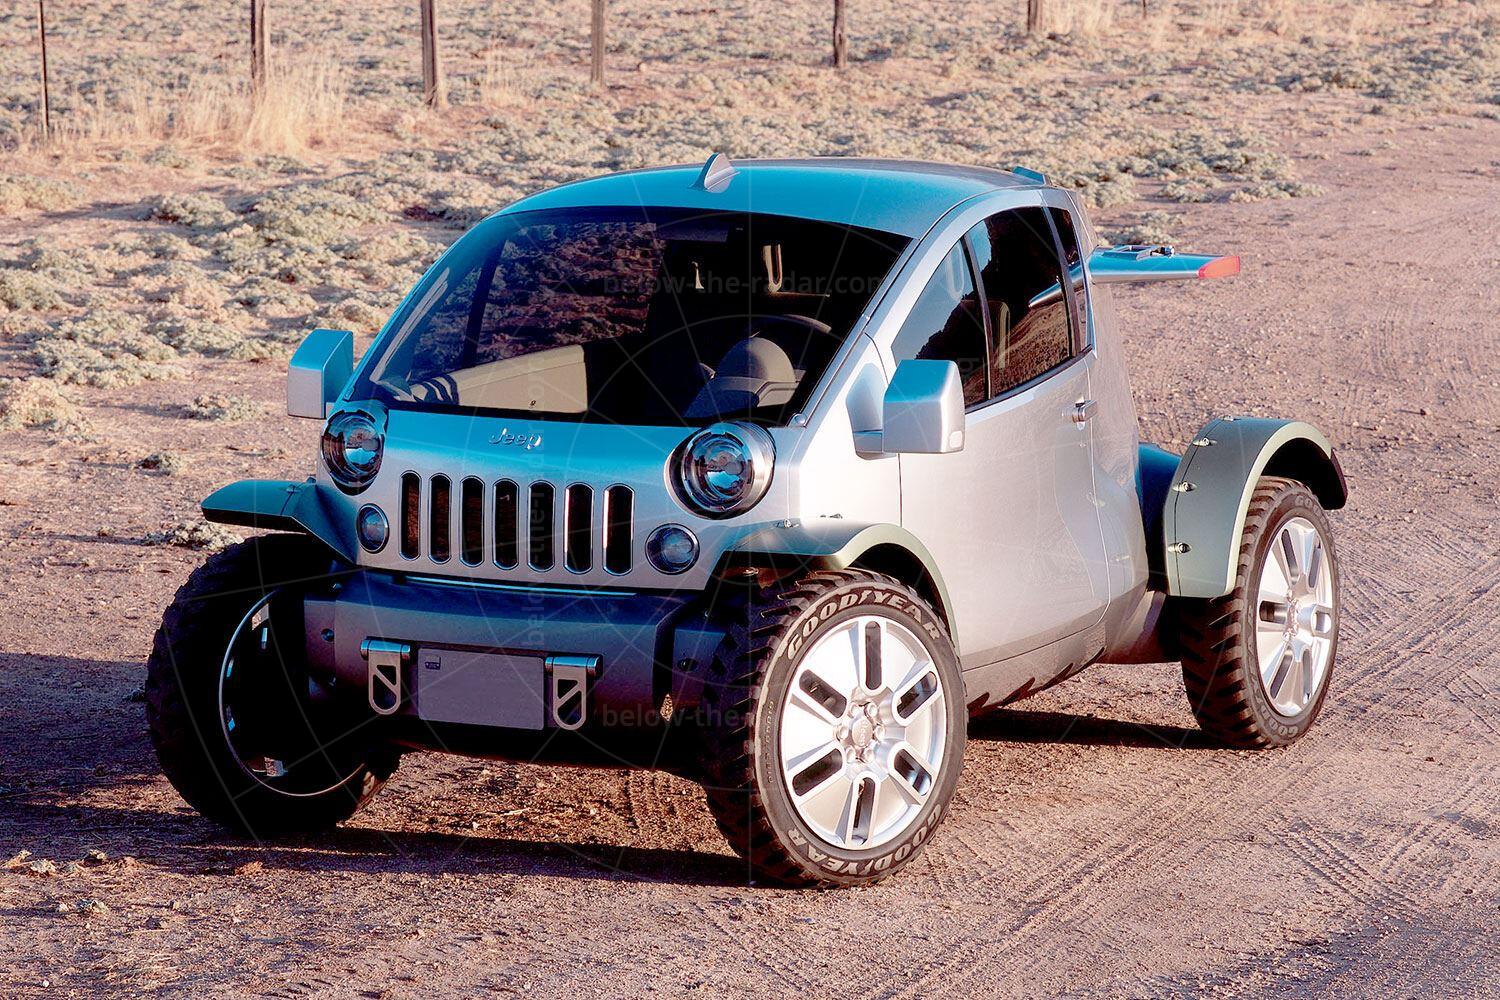 Jeep Treo concept Pic: Jeep | Jeep Treo concept